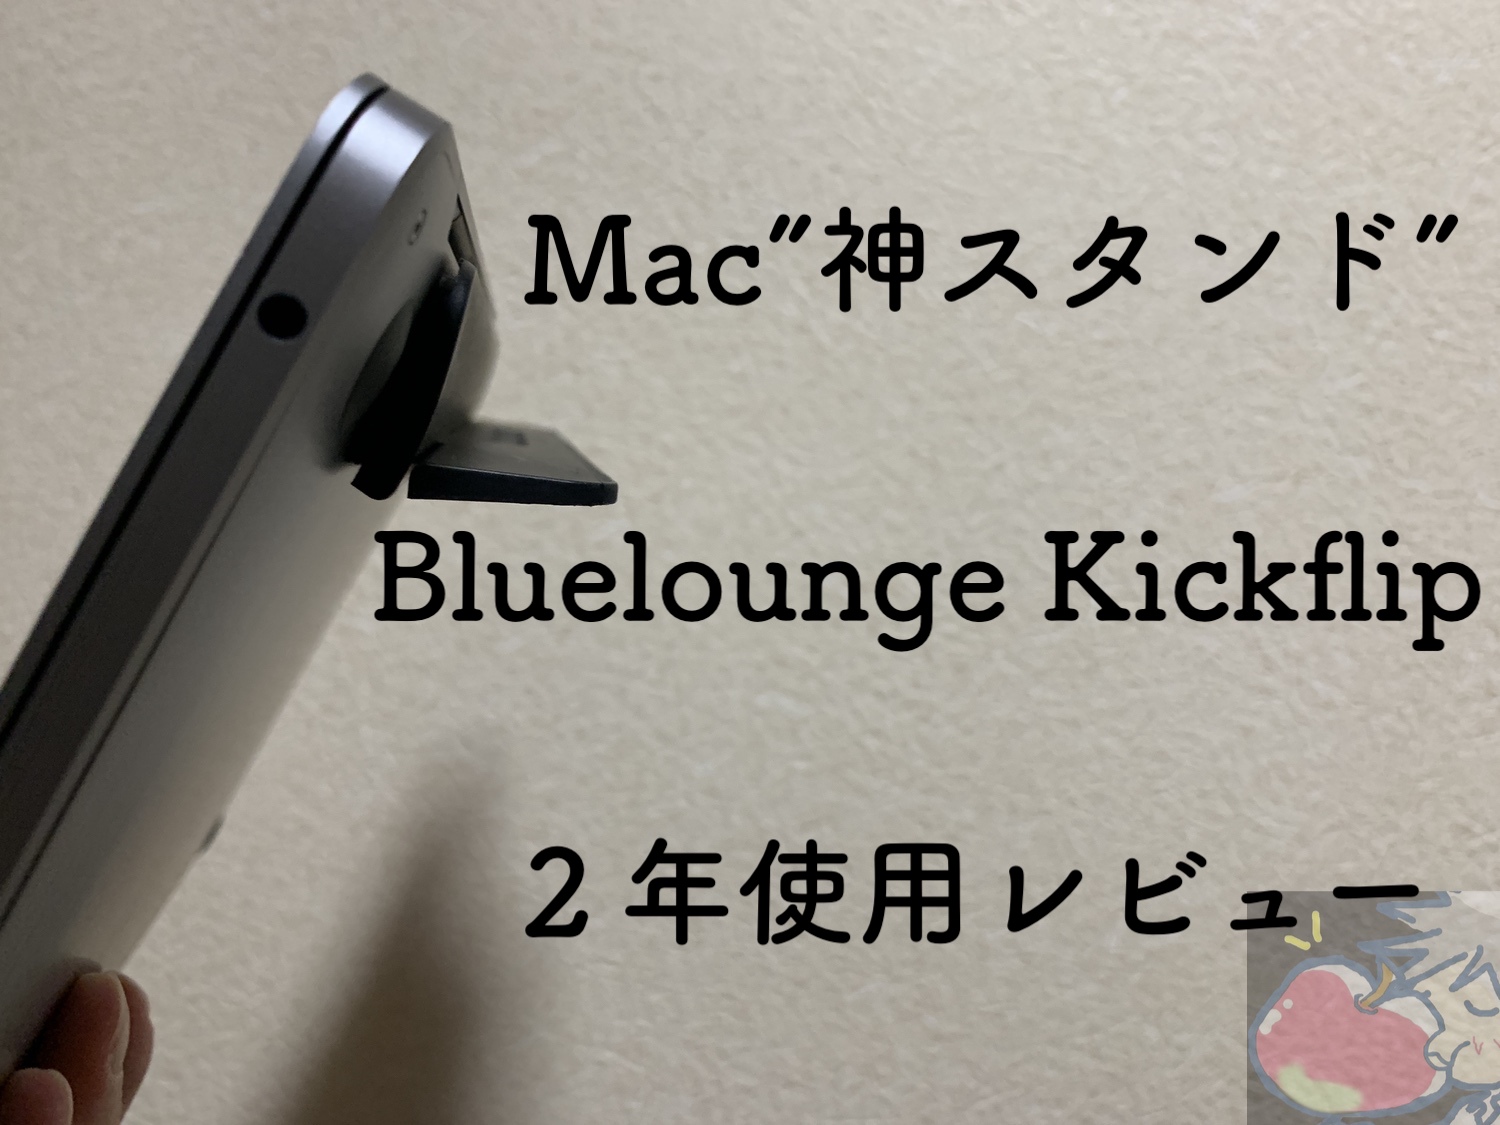 Mac”神スタンド”Bluelounge Kickflipを2年使って分かった12のこと